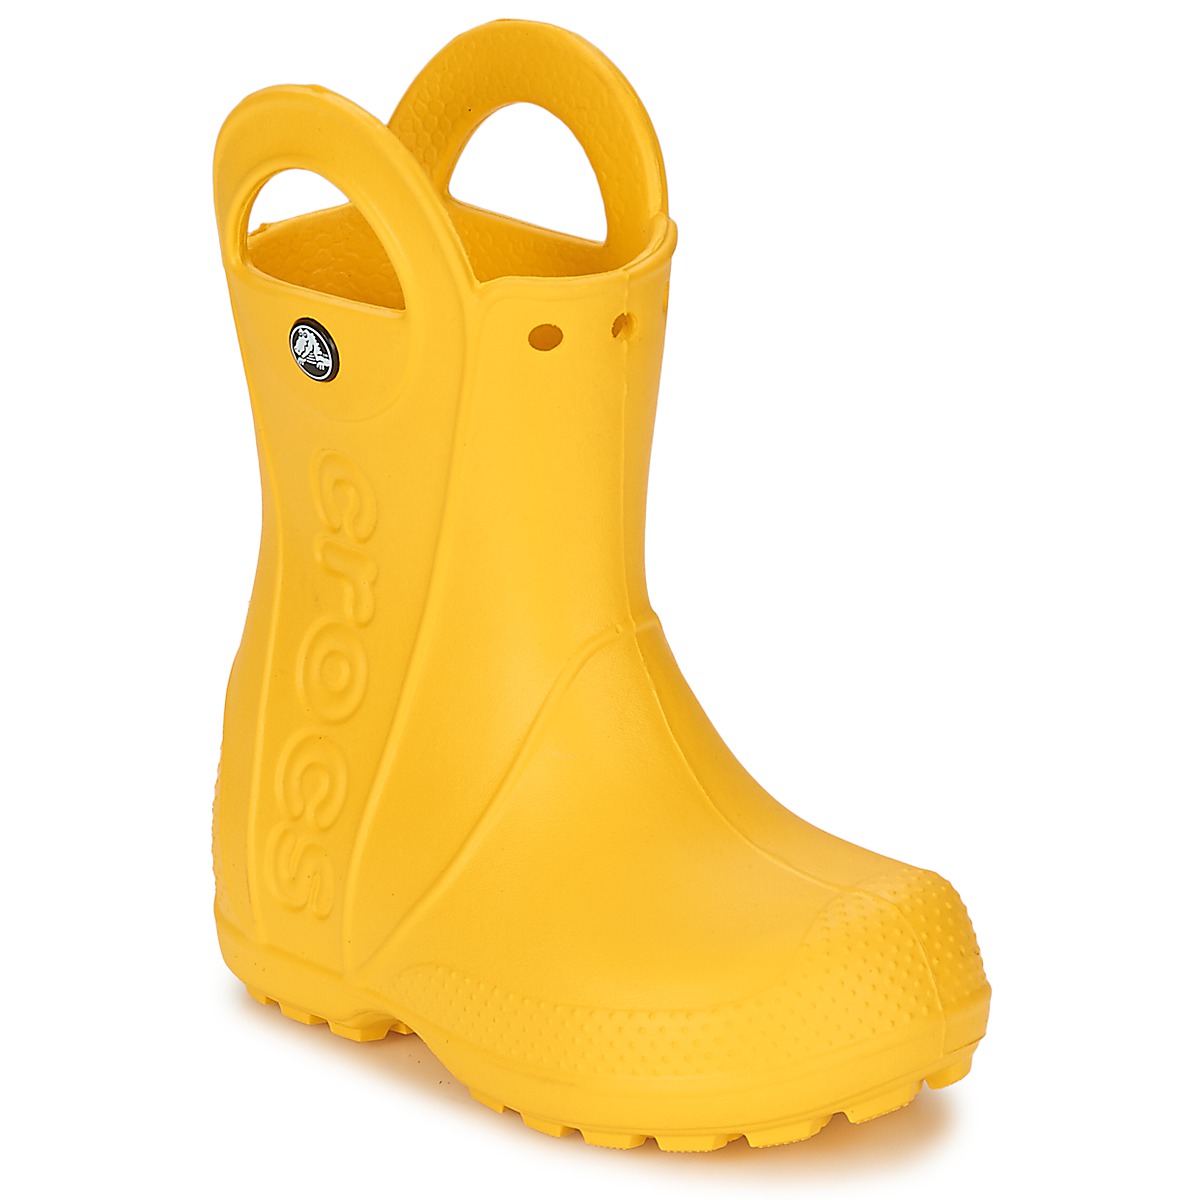 Schuhe Kinder Gummistiefel Crocs HANDLE IT RAIN BOOT KIDS Gelb